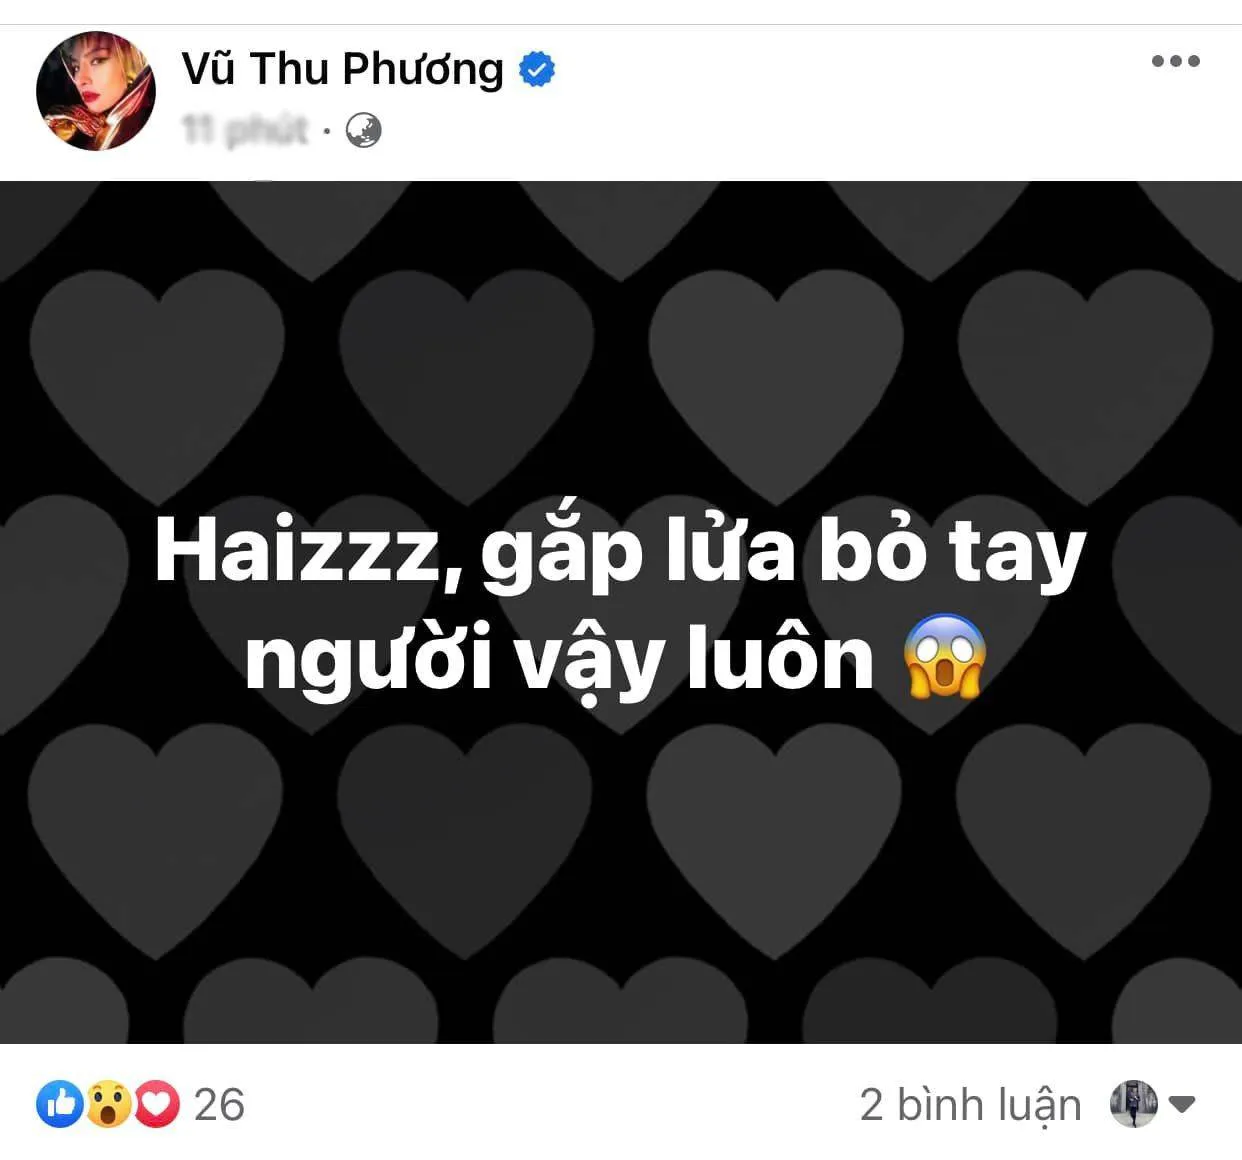 vu-thu-phuong(1)